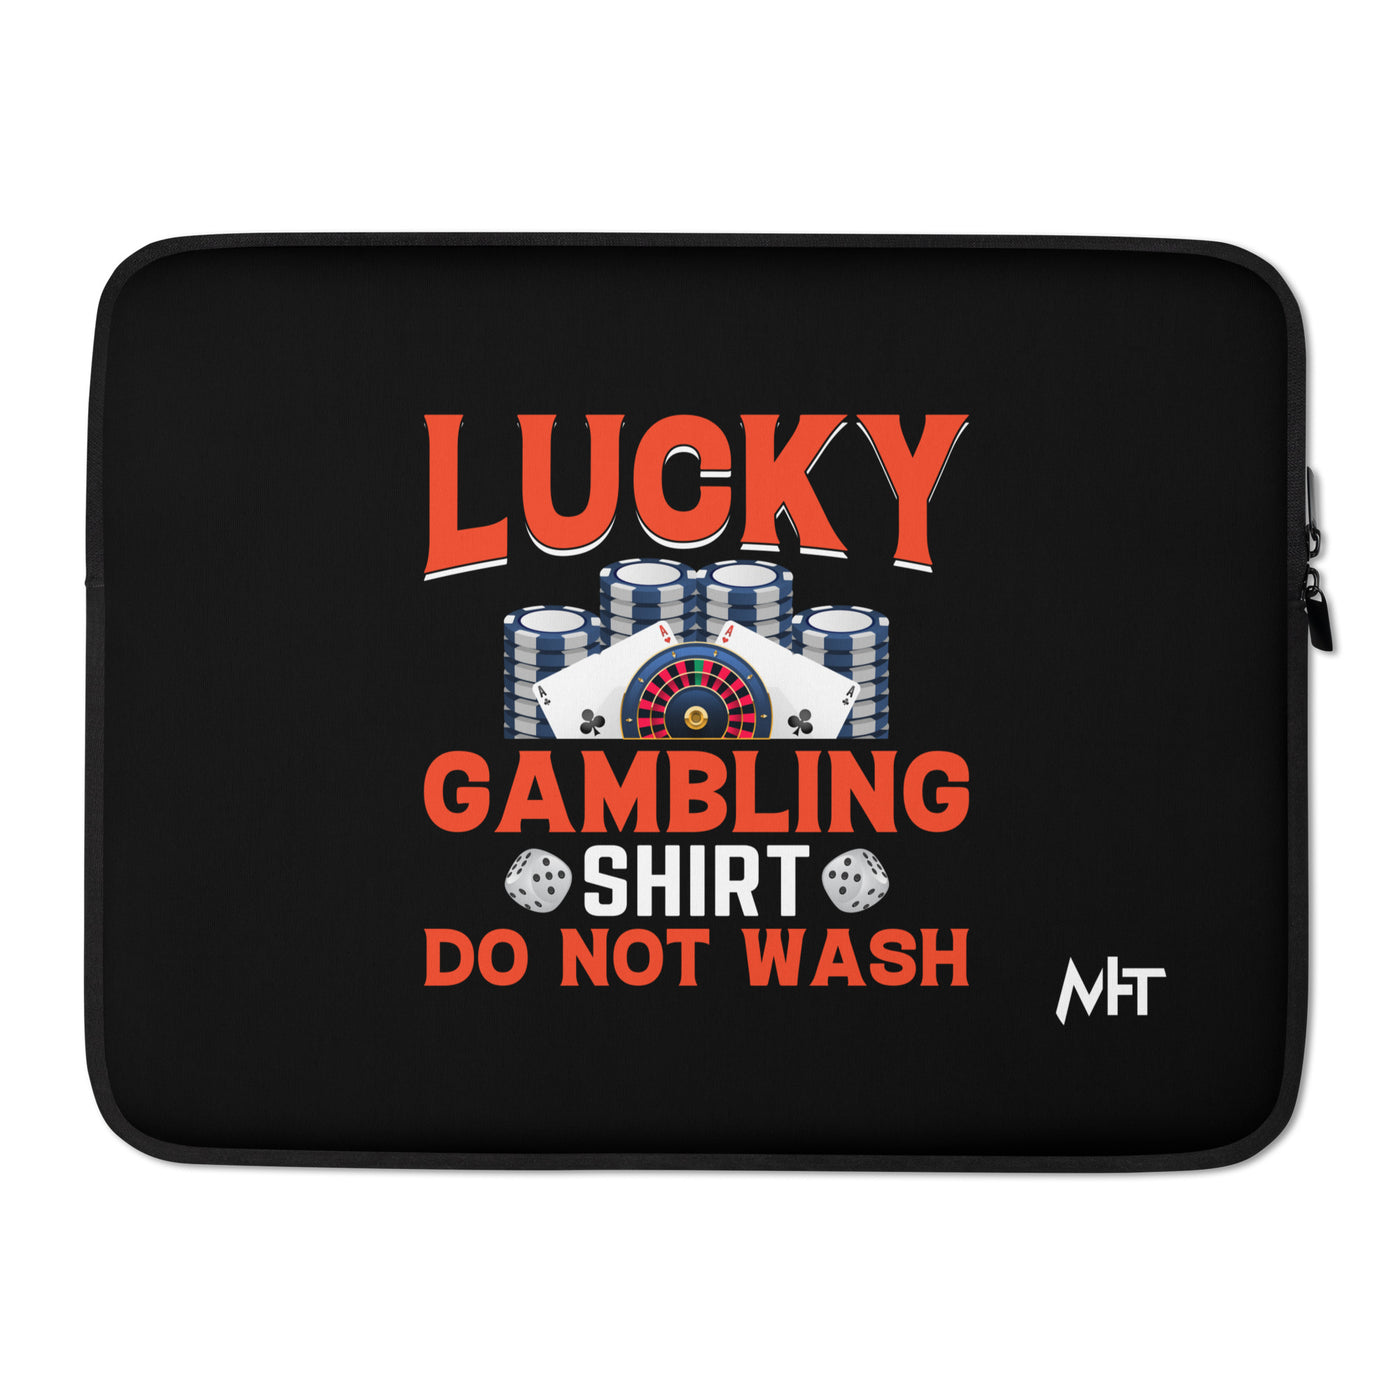 Lucky Gambling Shirt: Do Not Wash - Laptop Sleeve